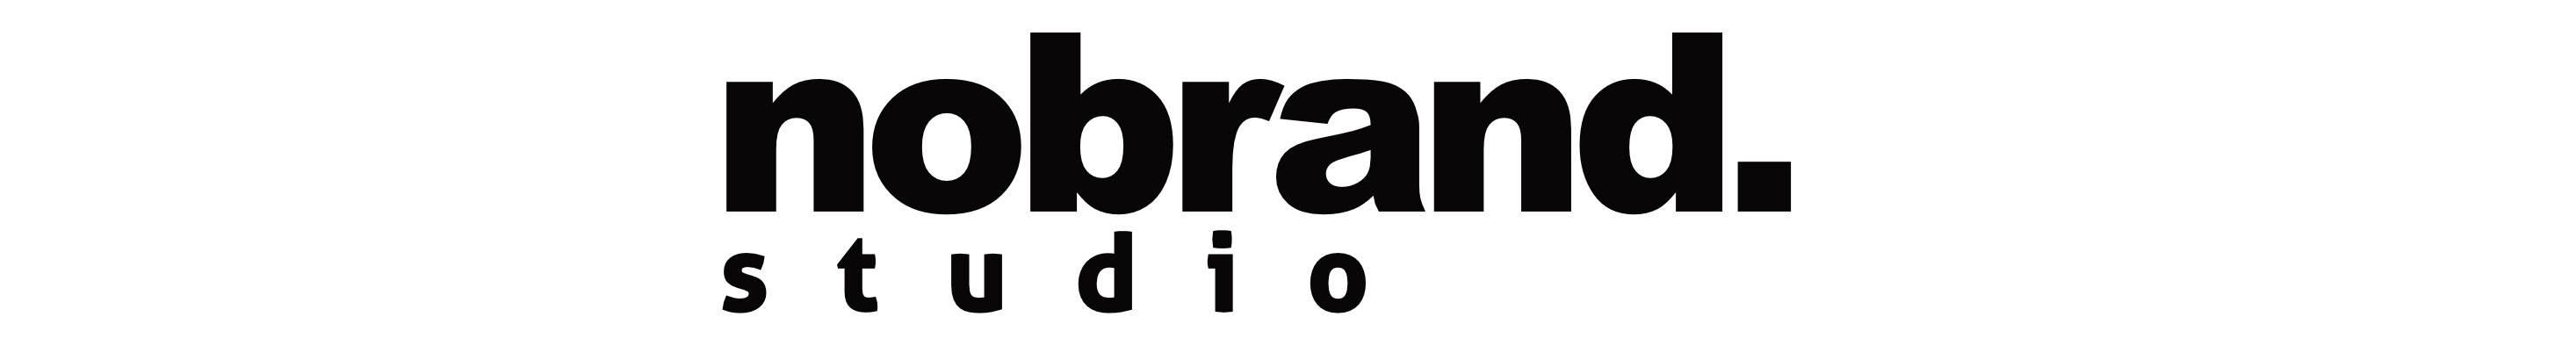 nobrand studio's profile banner